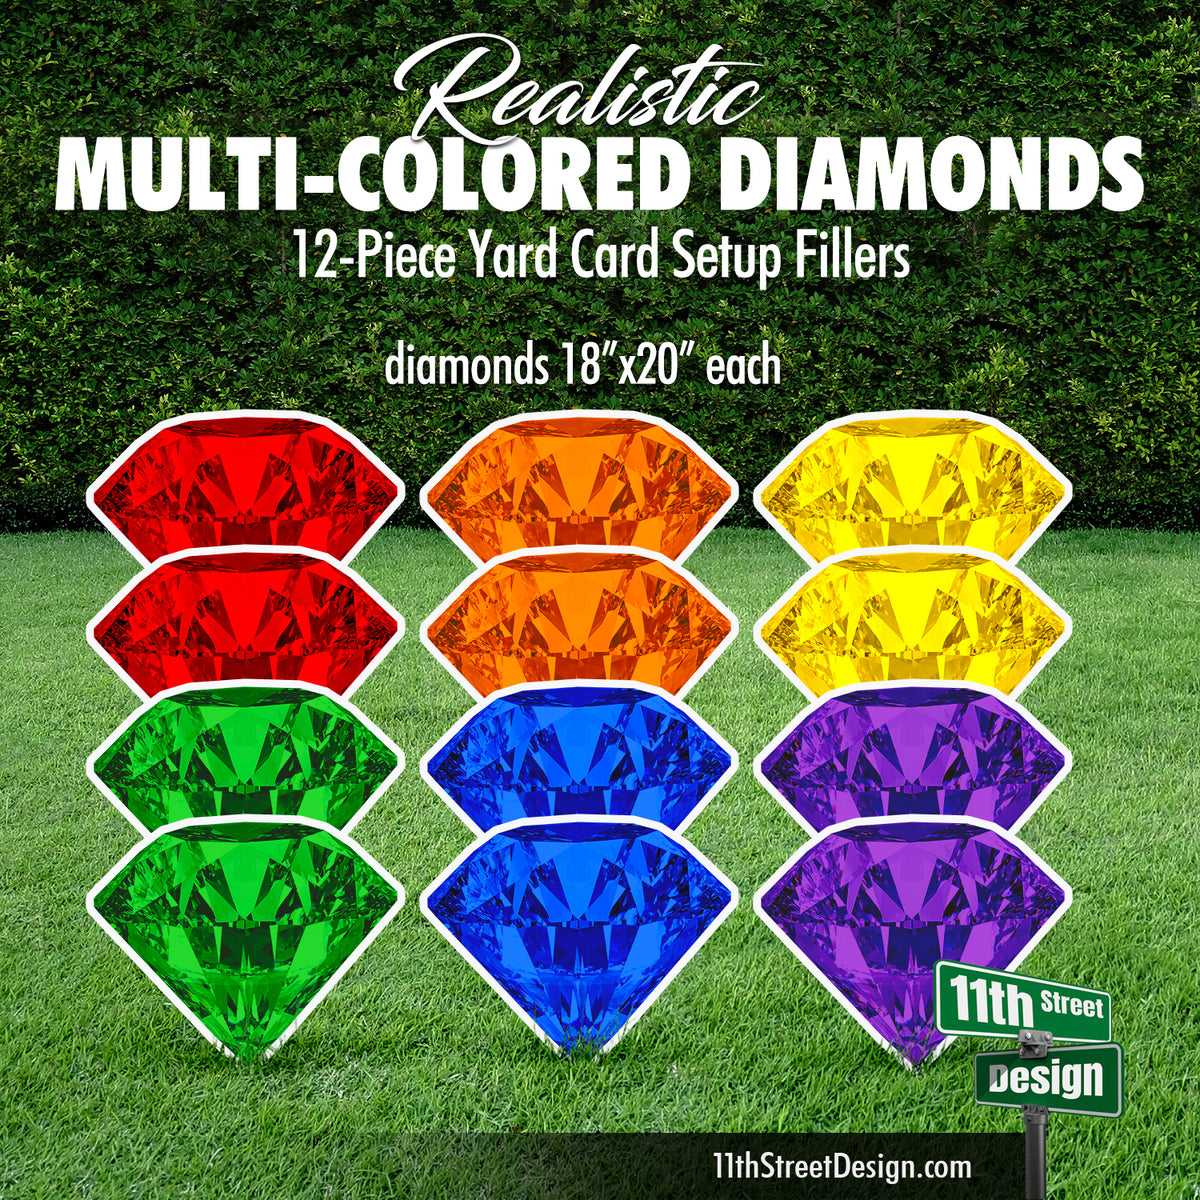 Realistic Rainbow Colored Diamonds - Yard Card Setup Fillers